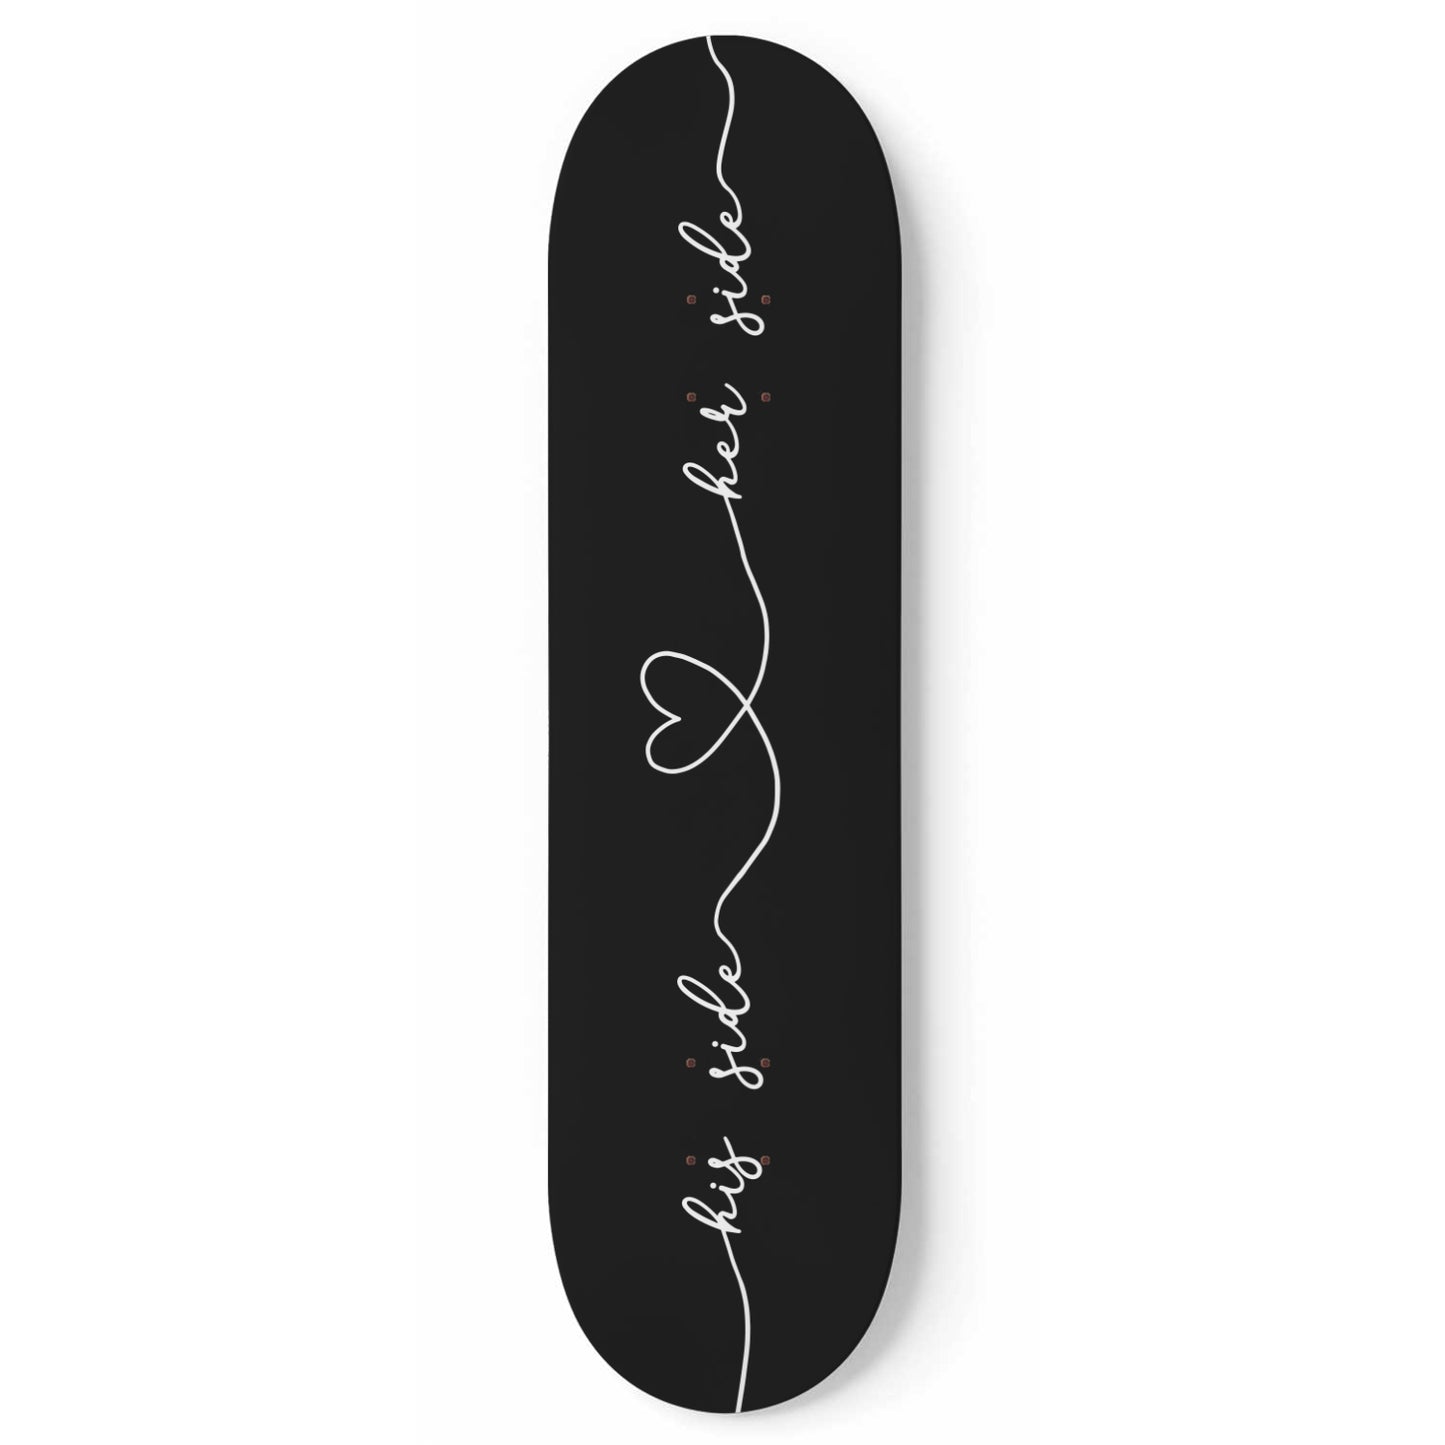 His side, her side in Black Housewarming Gift  - Skateboard Wall Art